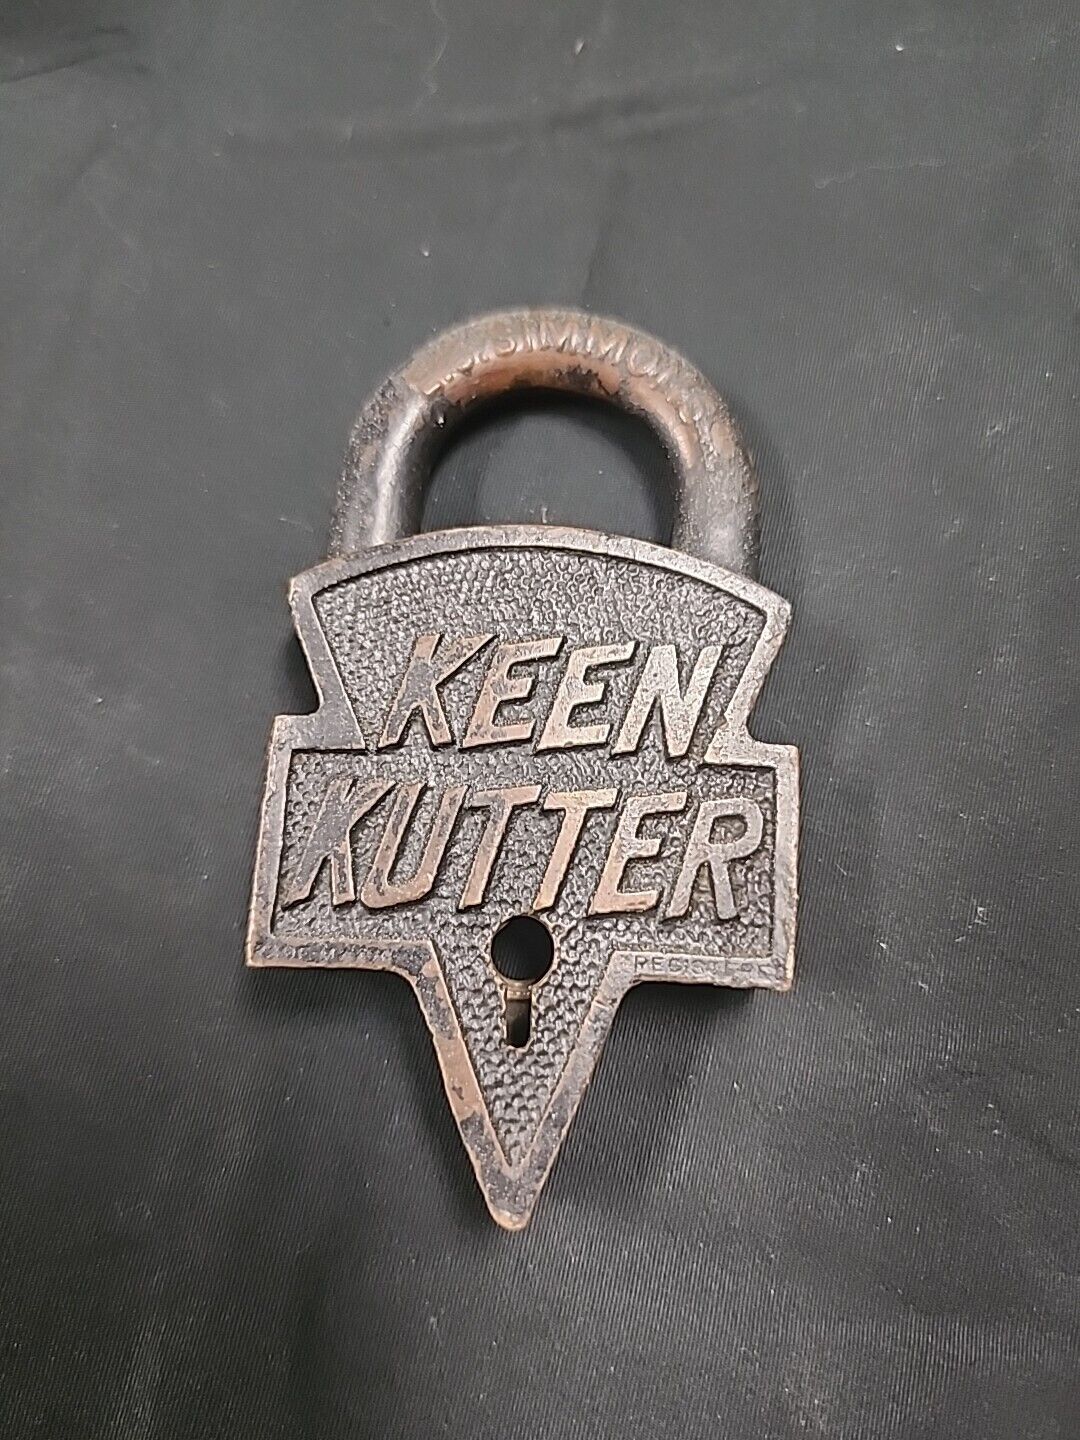 Vintage Keen Kutter Padlock no key